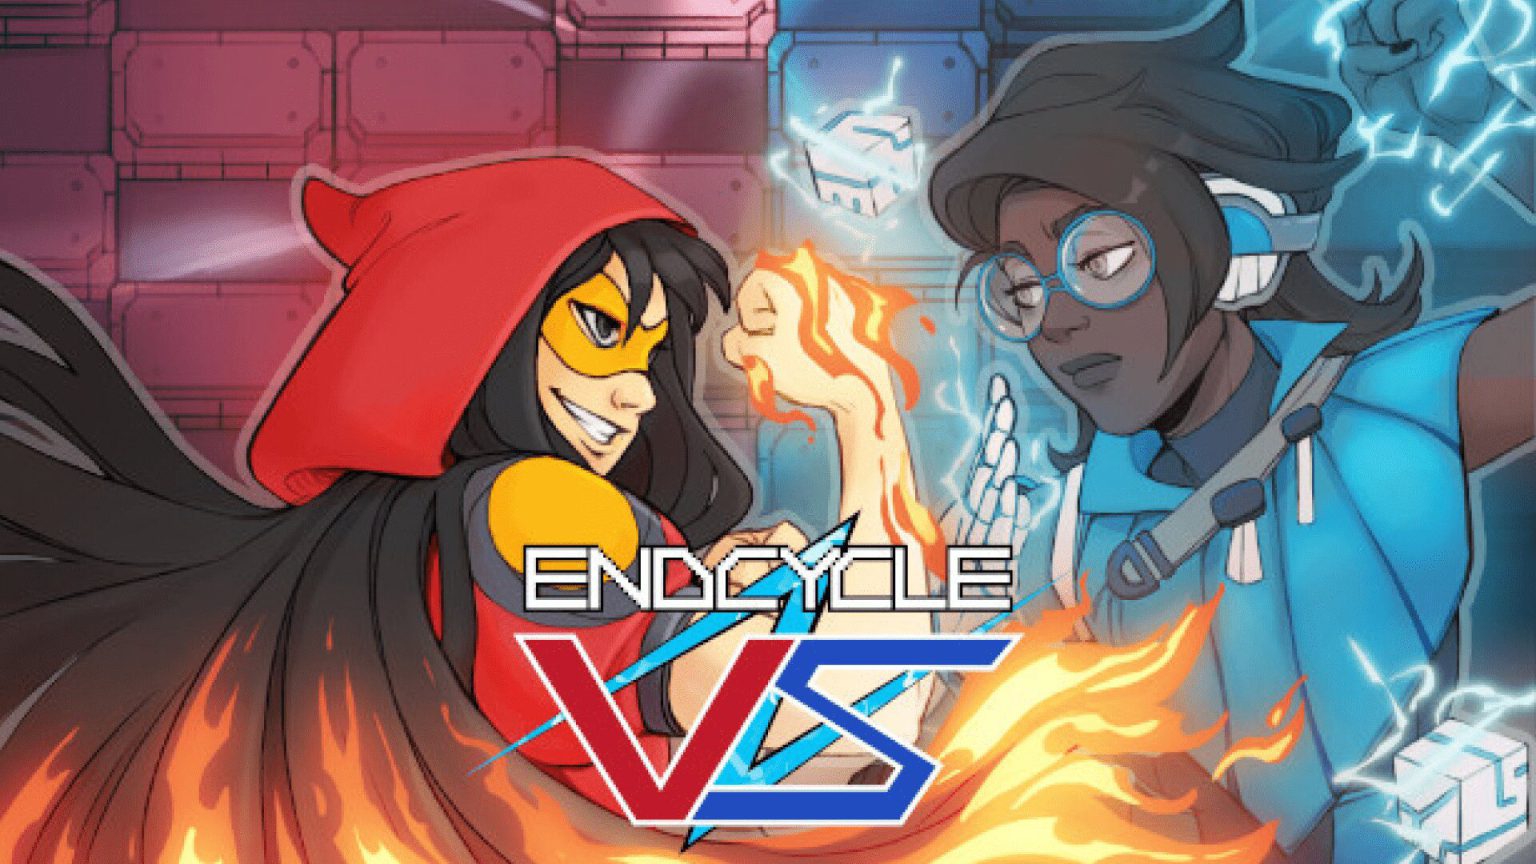 EndCycle VS